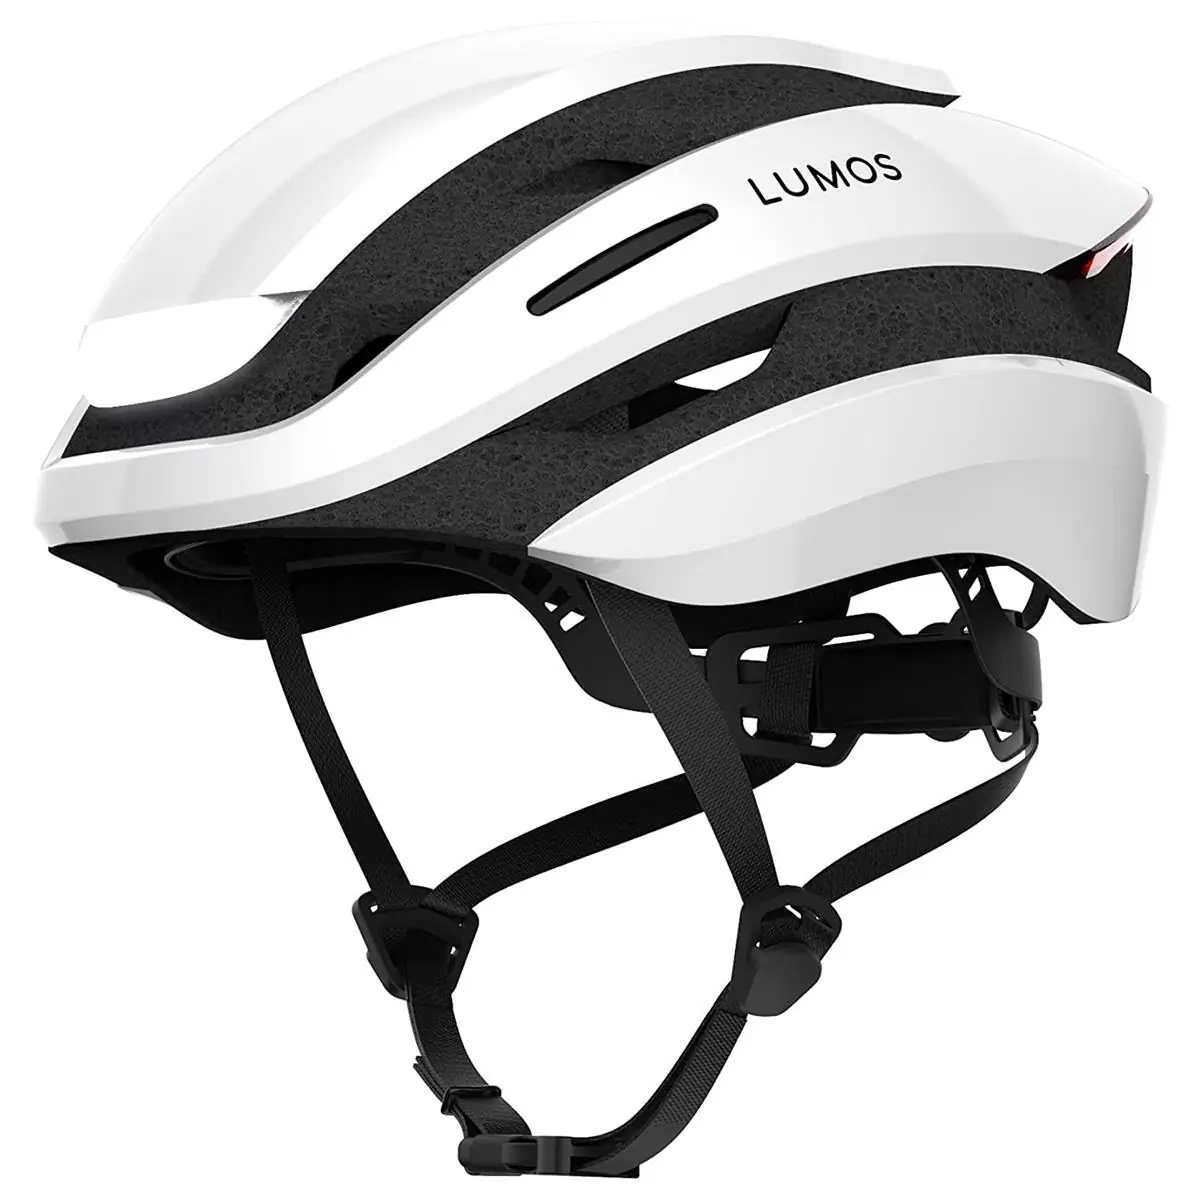 Ultra Helmet White MPIS Size M/L (54-61cm) - image